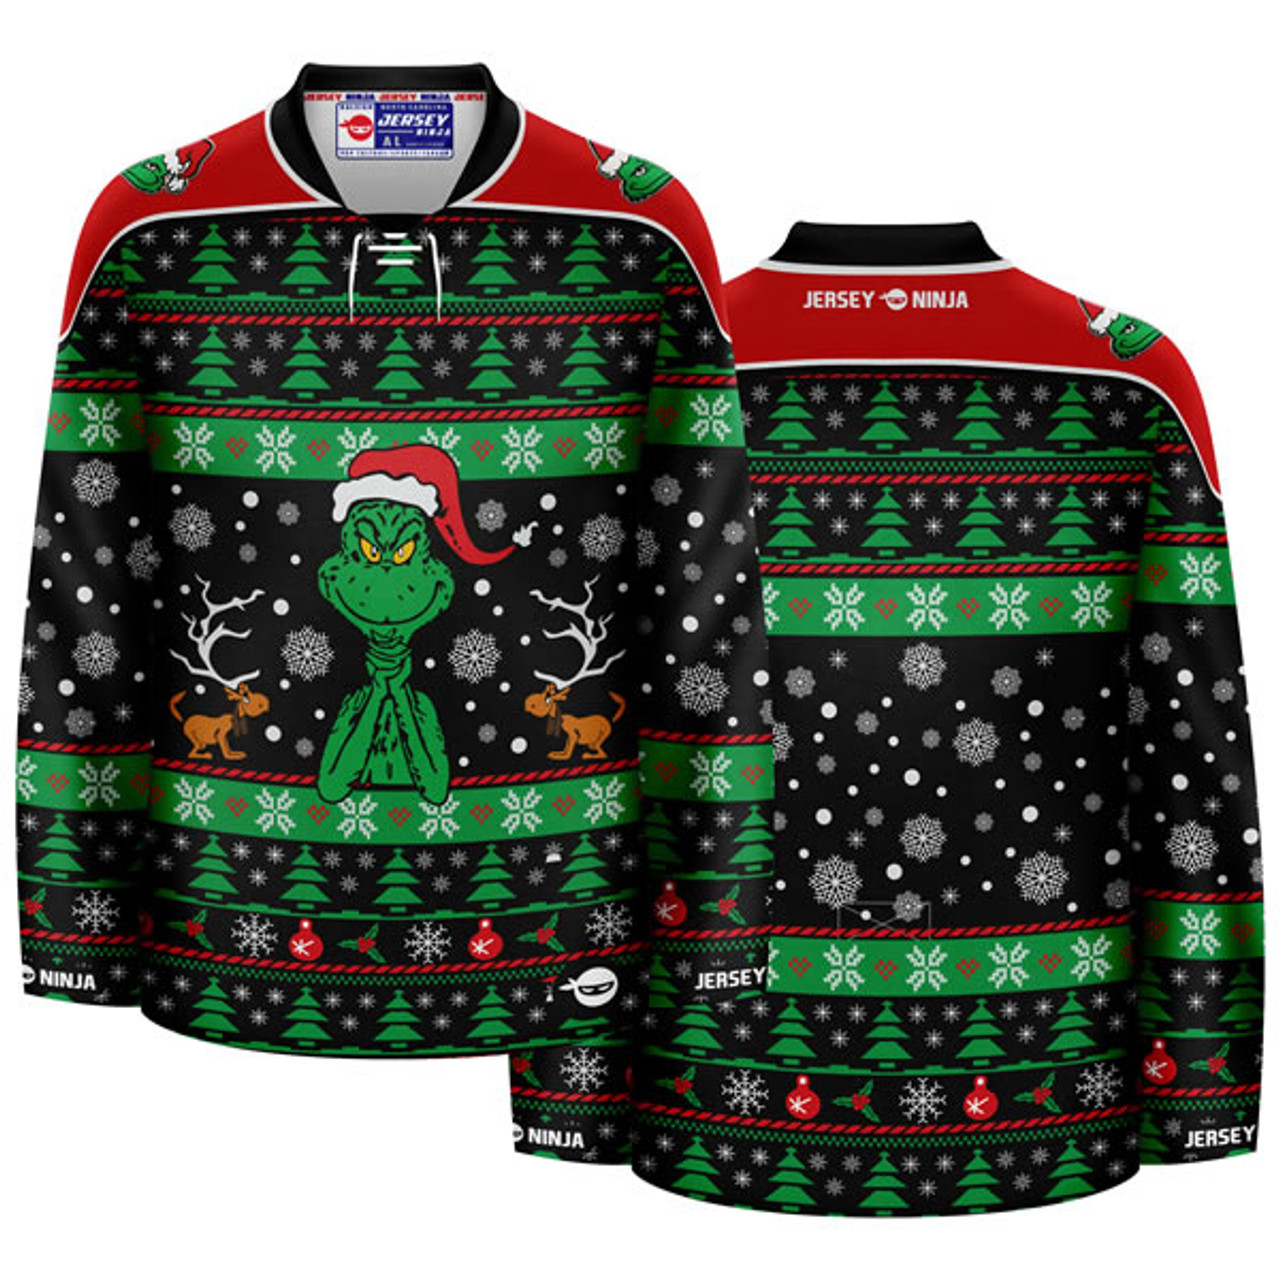 Jersey Ninja - Christmas Elf Outfit Hockey Jersey